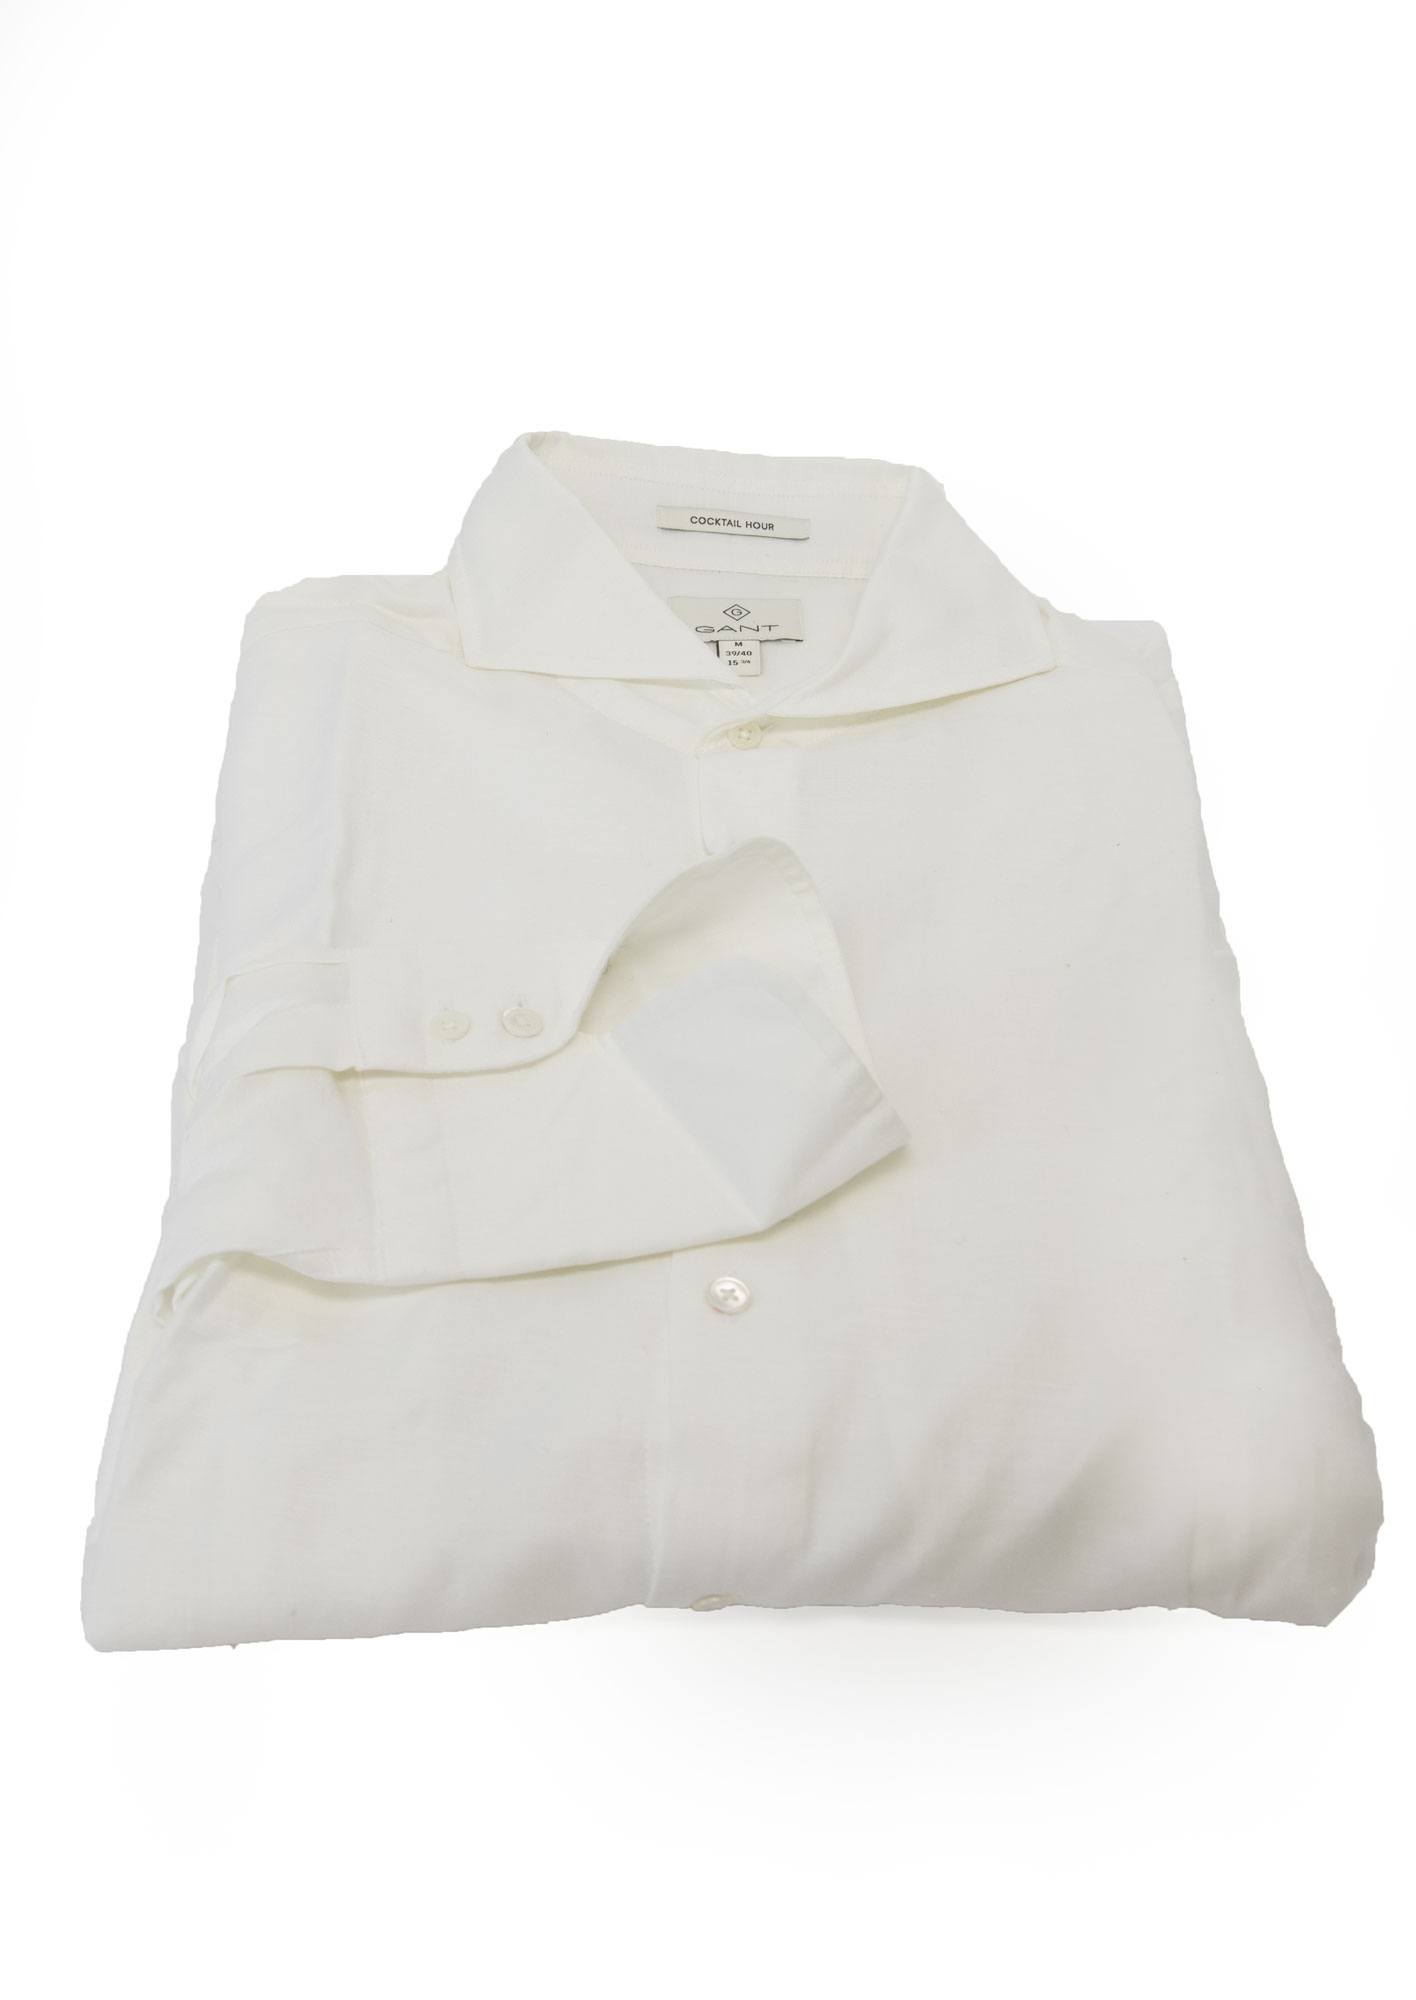 Gant USA GANT DIAMOND G Men's Cotton Linen Flannel Amalfi 384447 Size M $225 NWT